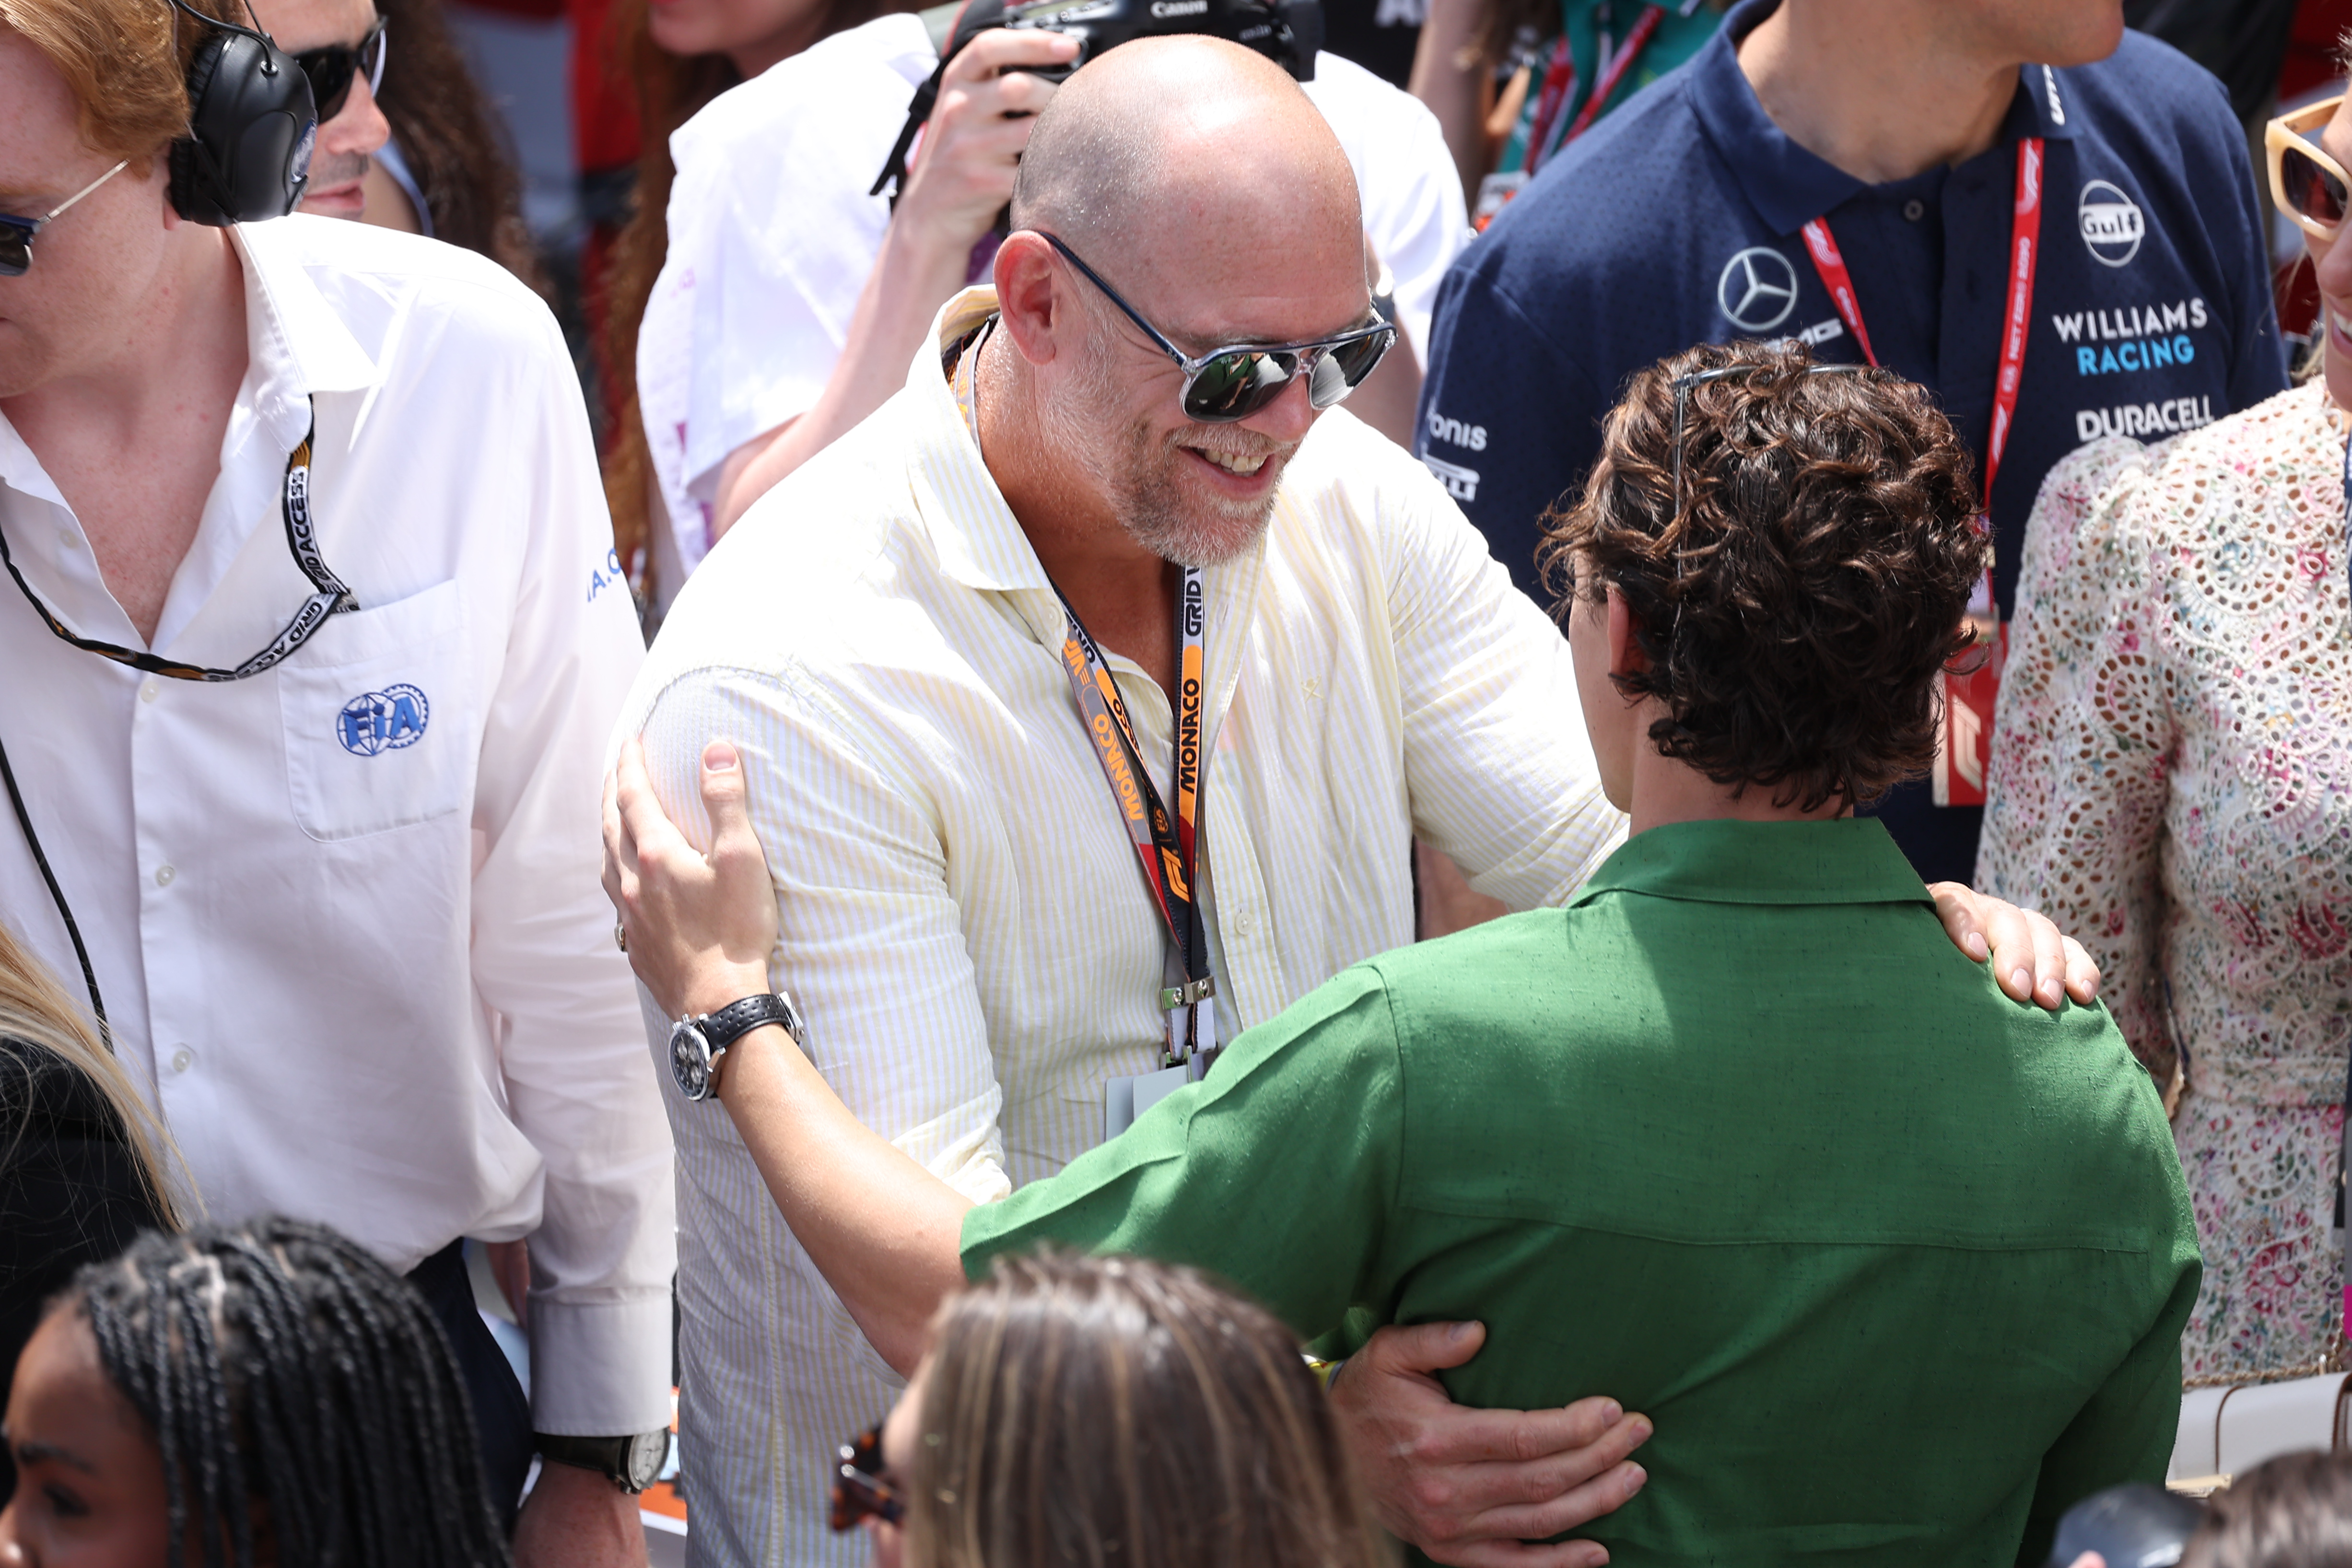 Mike embrasse Tom Holland au Grand Prix de F1 de Monaco